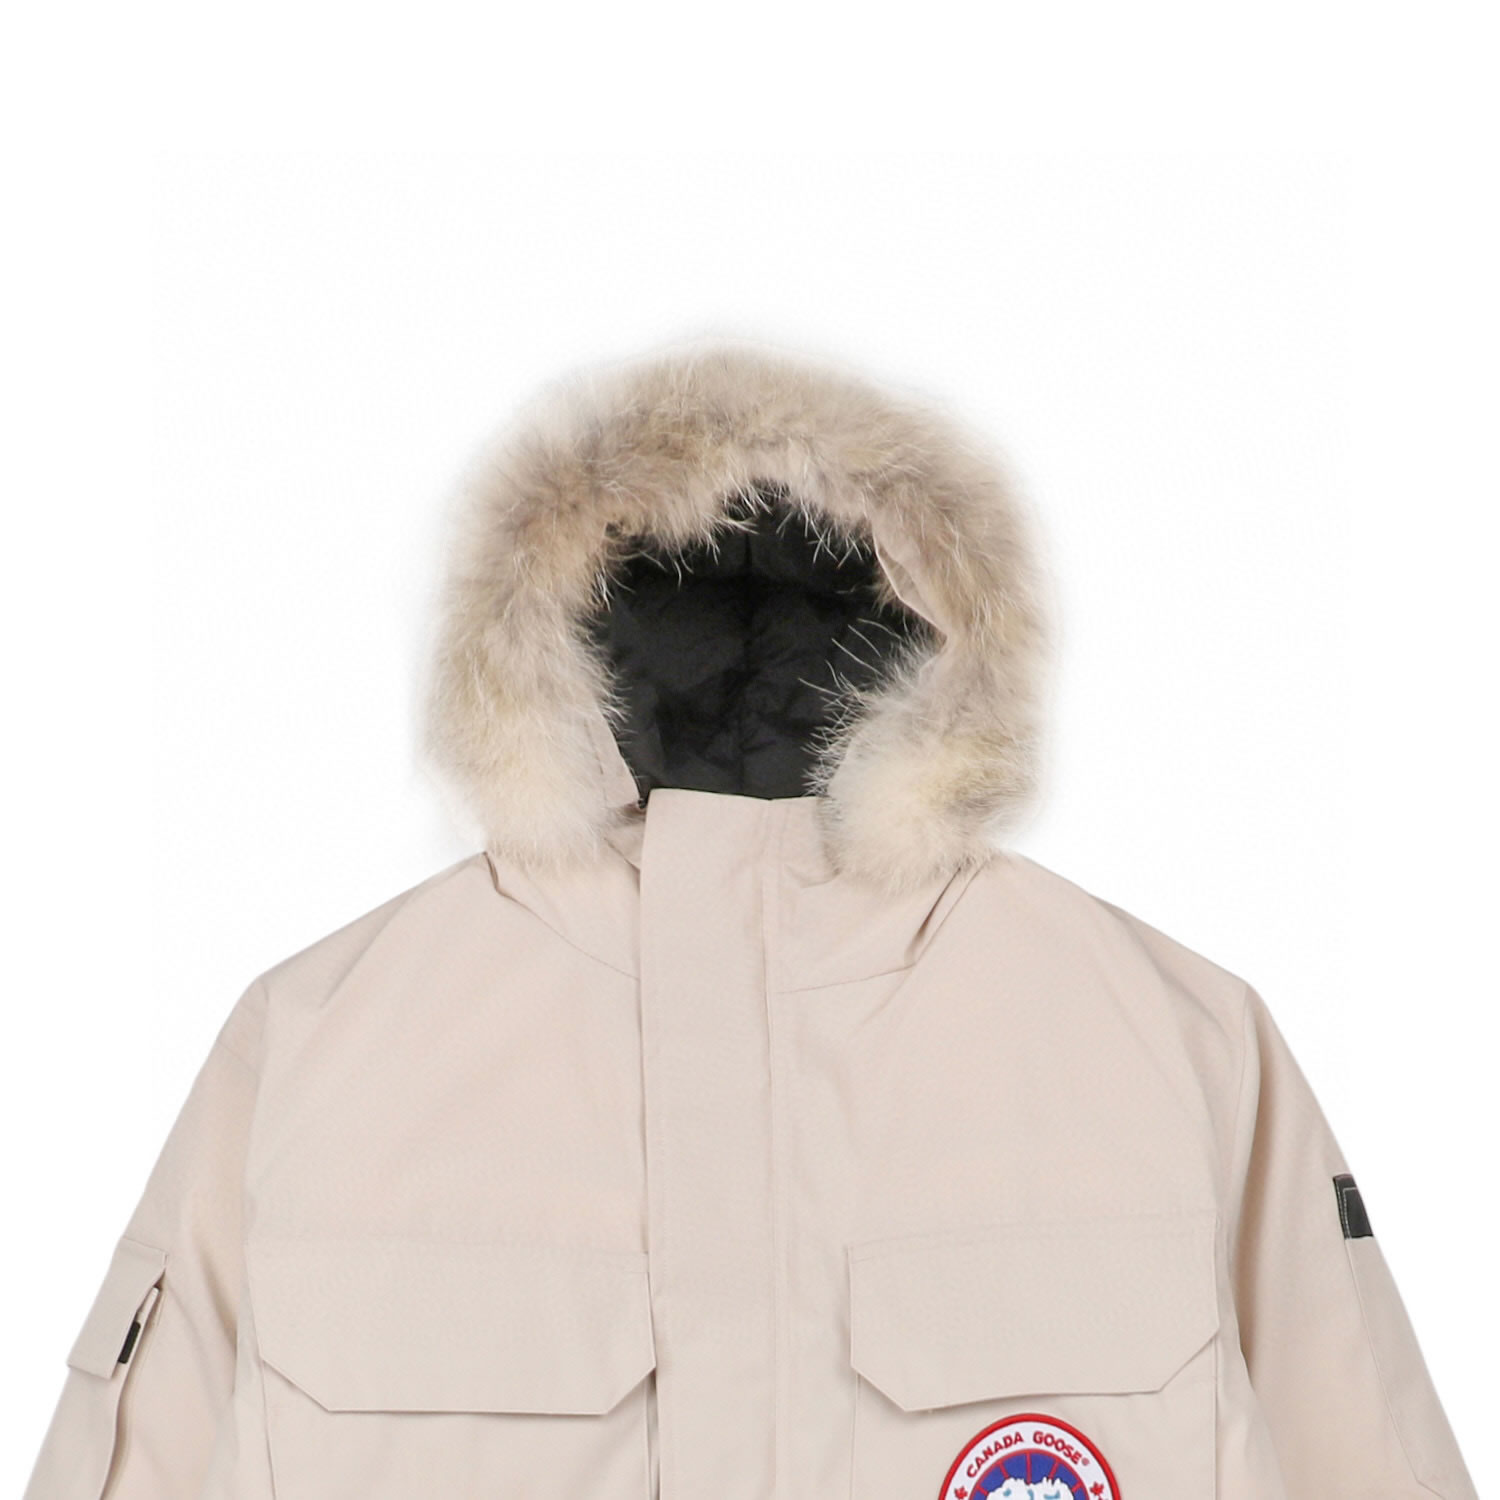 08 Canada Goose 19fw Expedition 4660ma Down Jacket Coat Cream White (5) - newkick.org